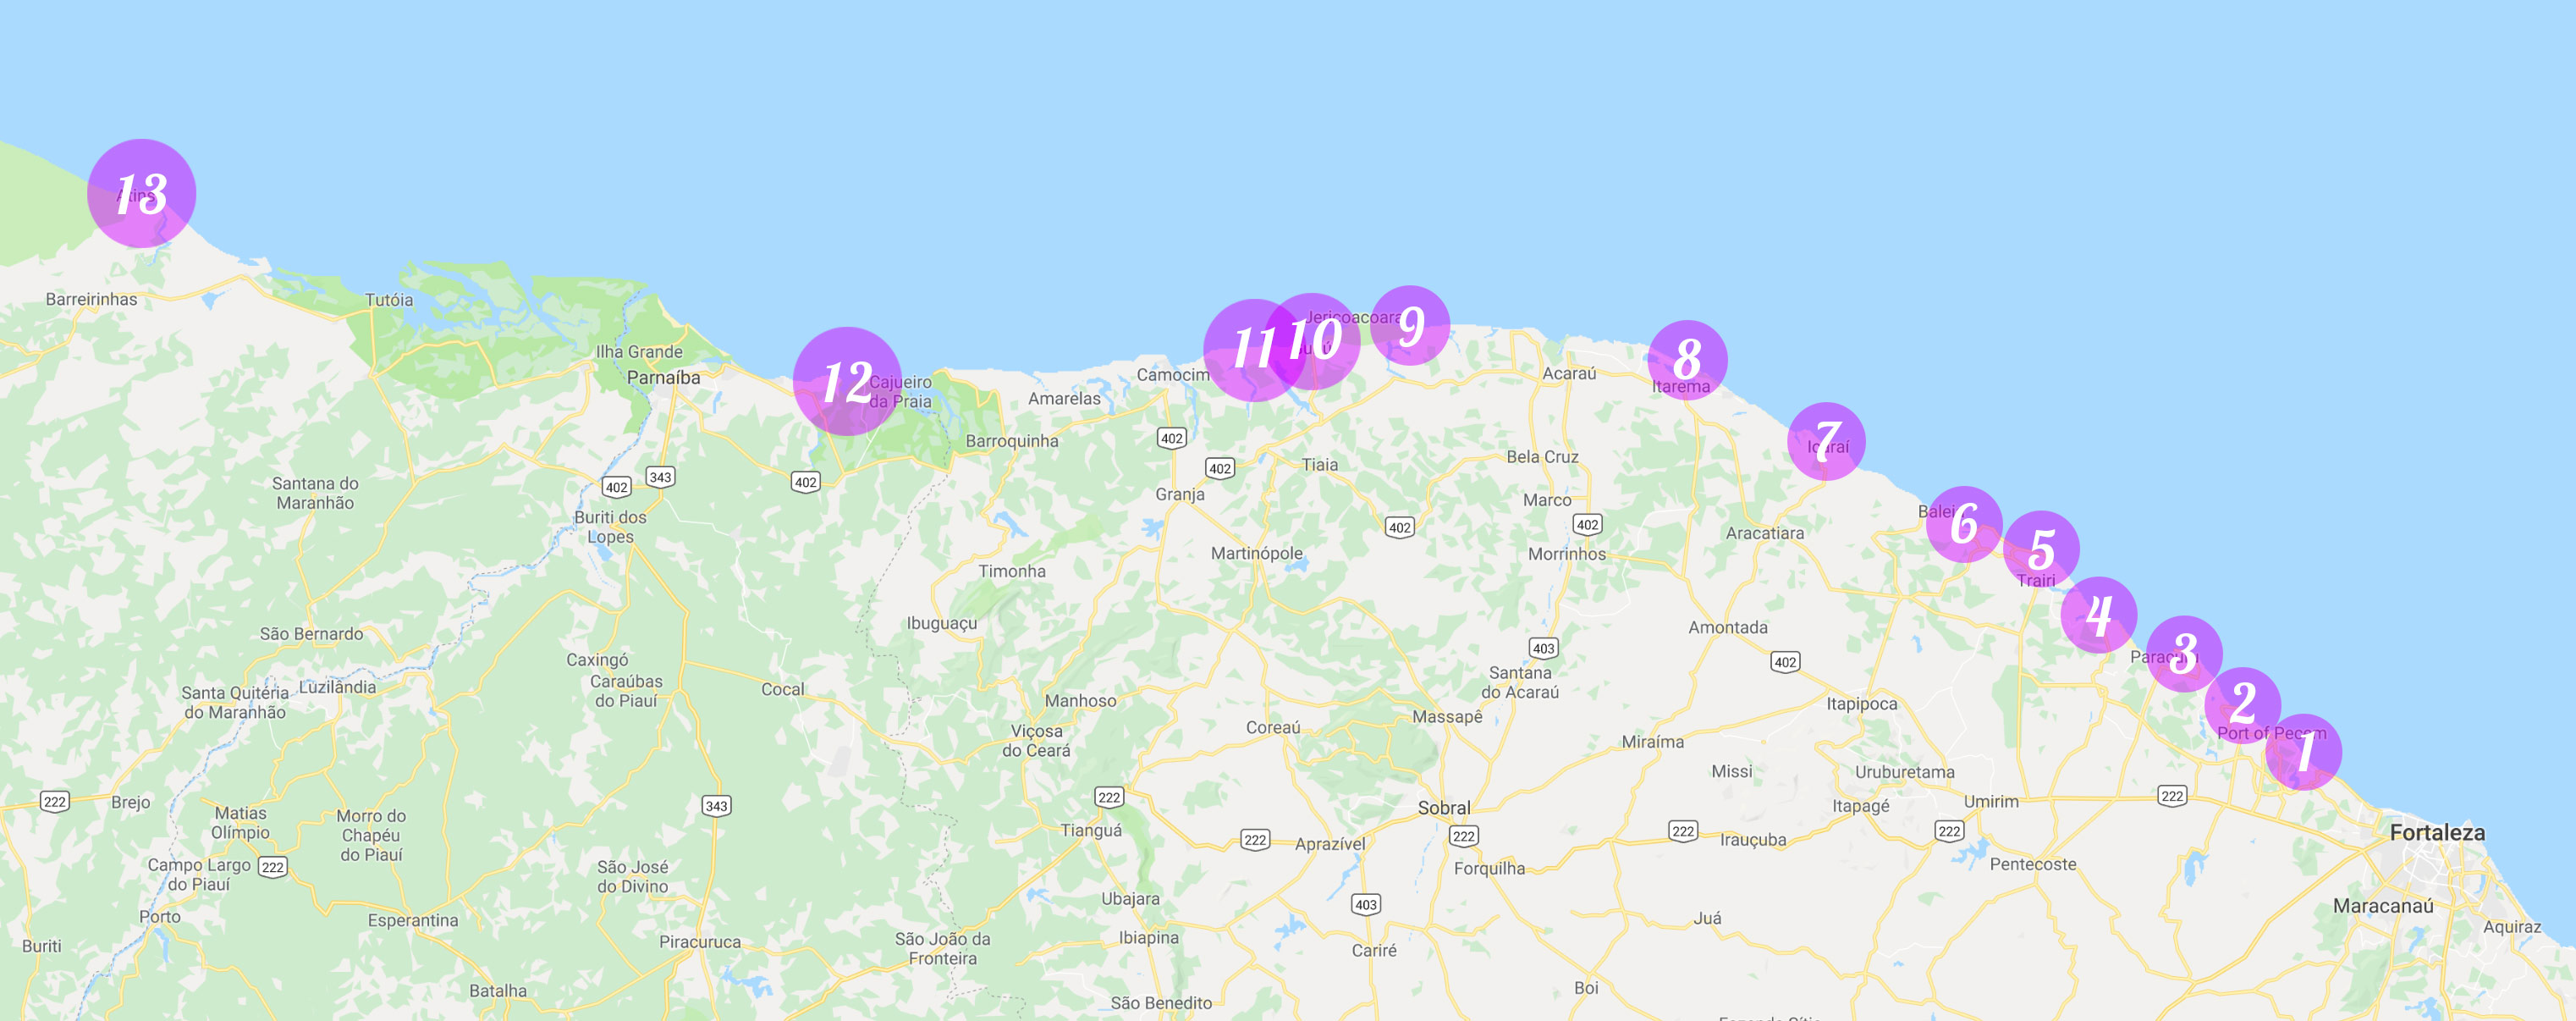 Map of kite spots in Northern Brazil